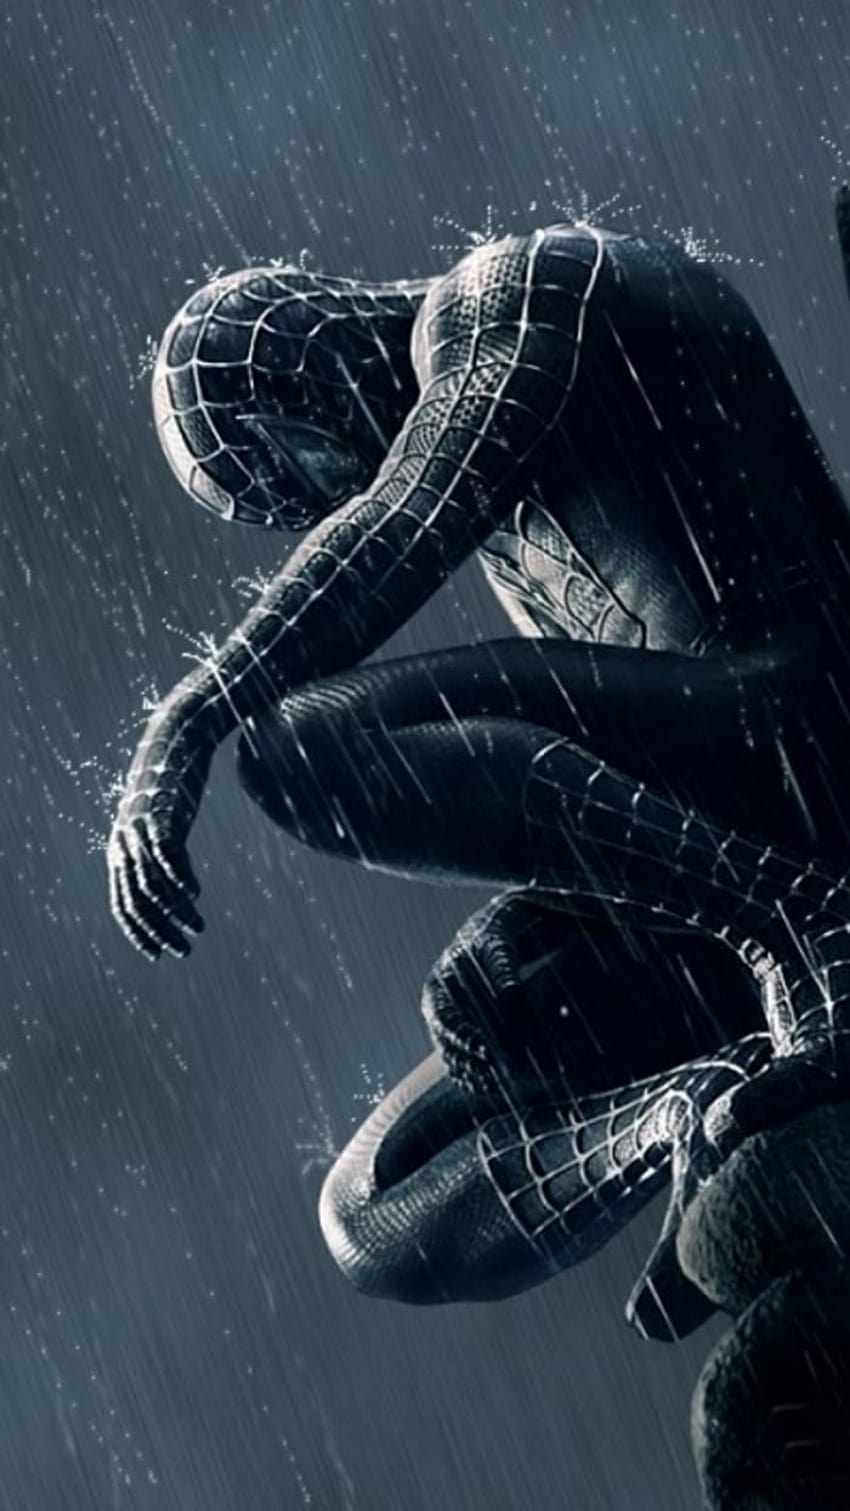 The Black Suit Spiderman Wallpaper